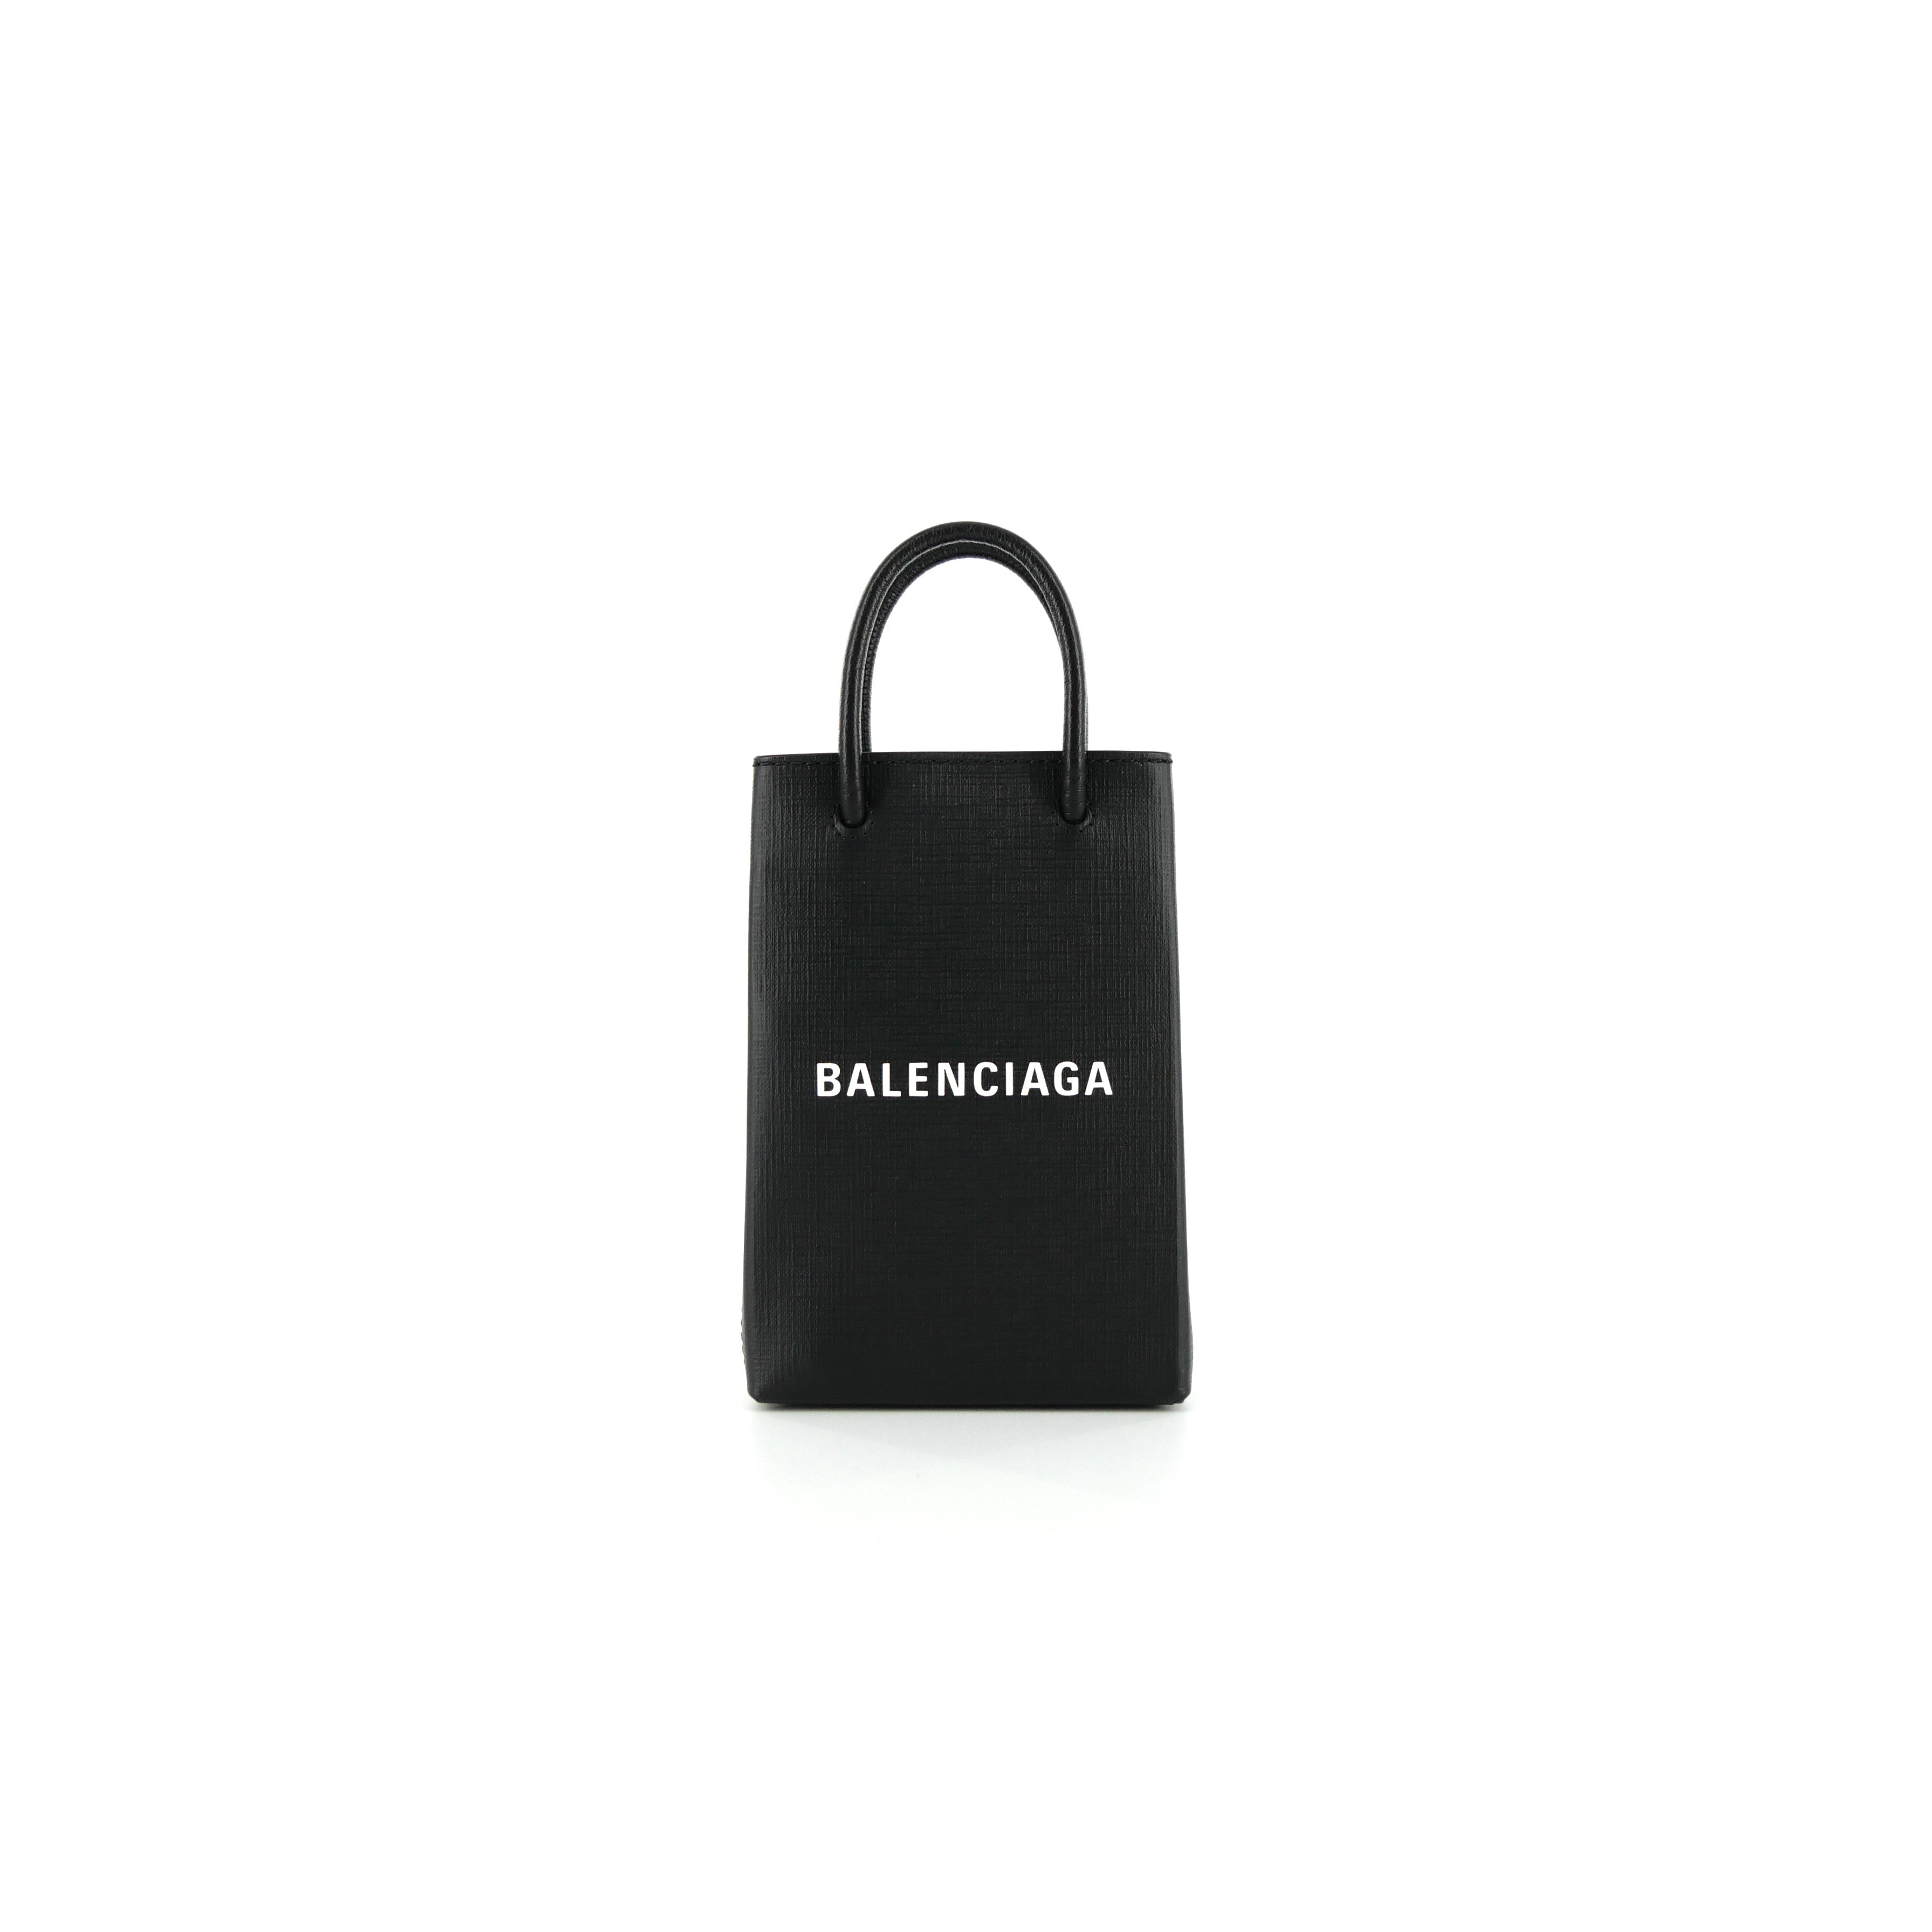 BALENCIAGA[バレンシアガ] / MINI SHOPPING BAG(BLACK) [ミニ ショッピング バッグ]